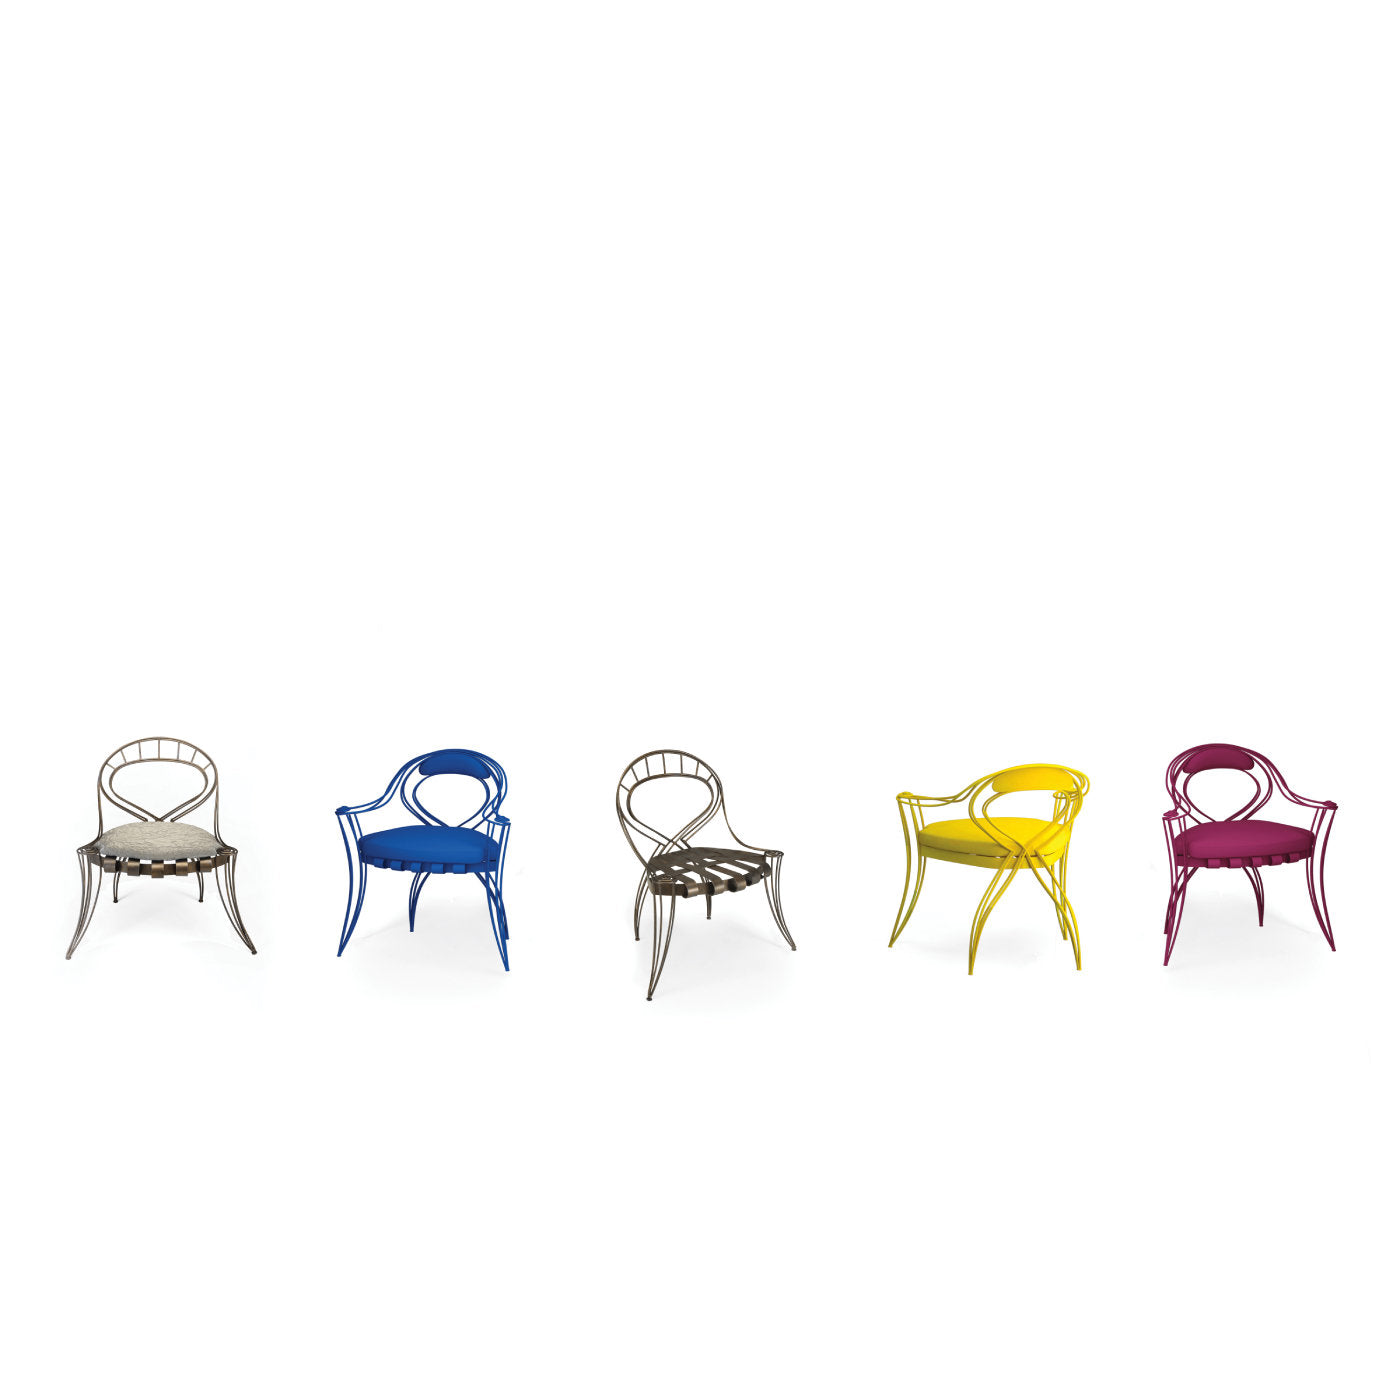 Opus Garden Chair by Carlo Rampazzi - Alternative view 2